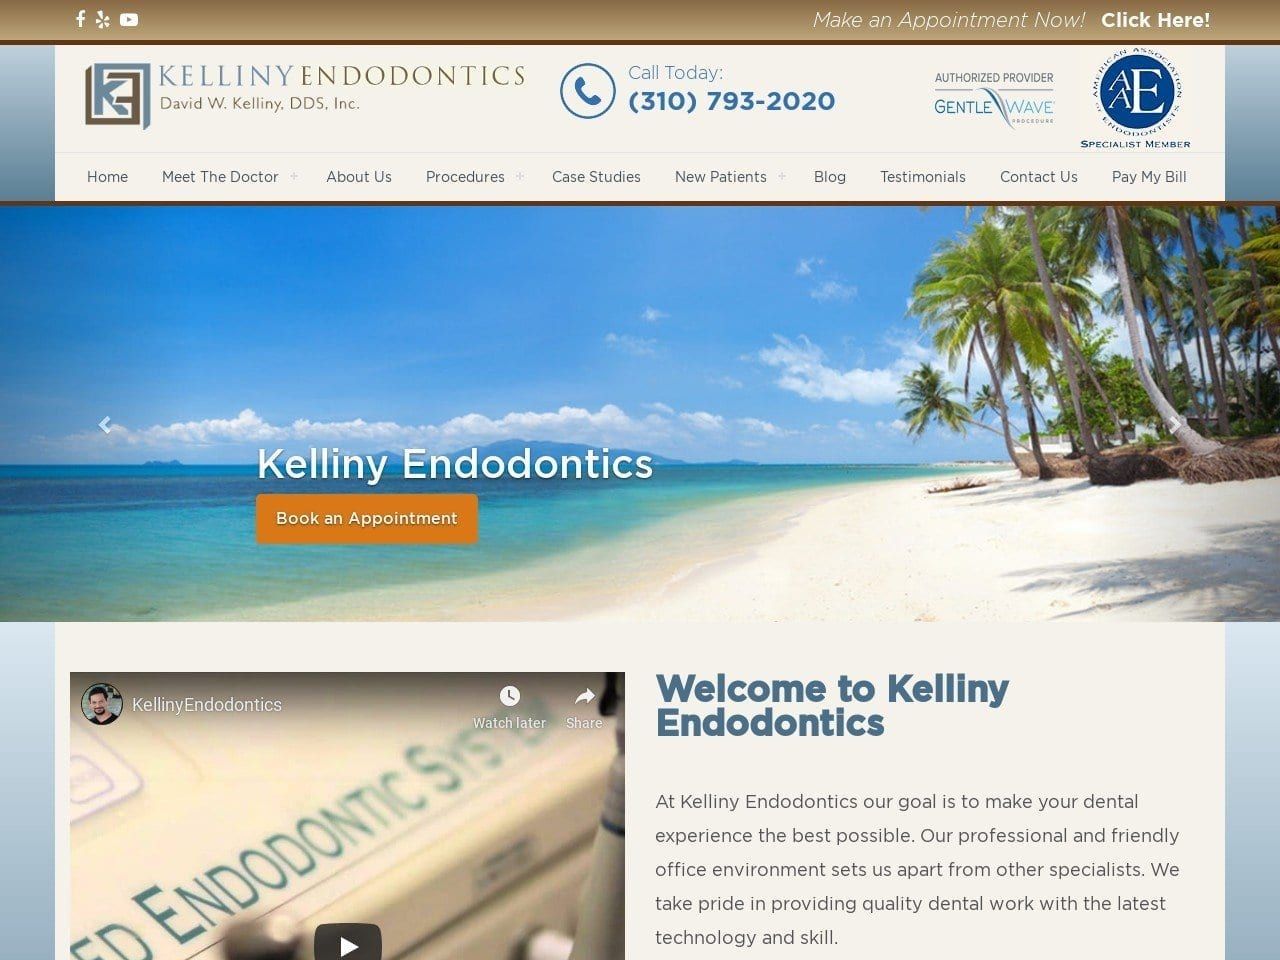 Kelliny Endodontics Website Screenshot from kellinyendodontics.com